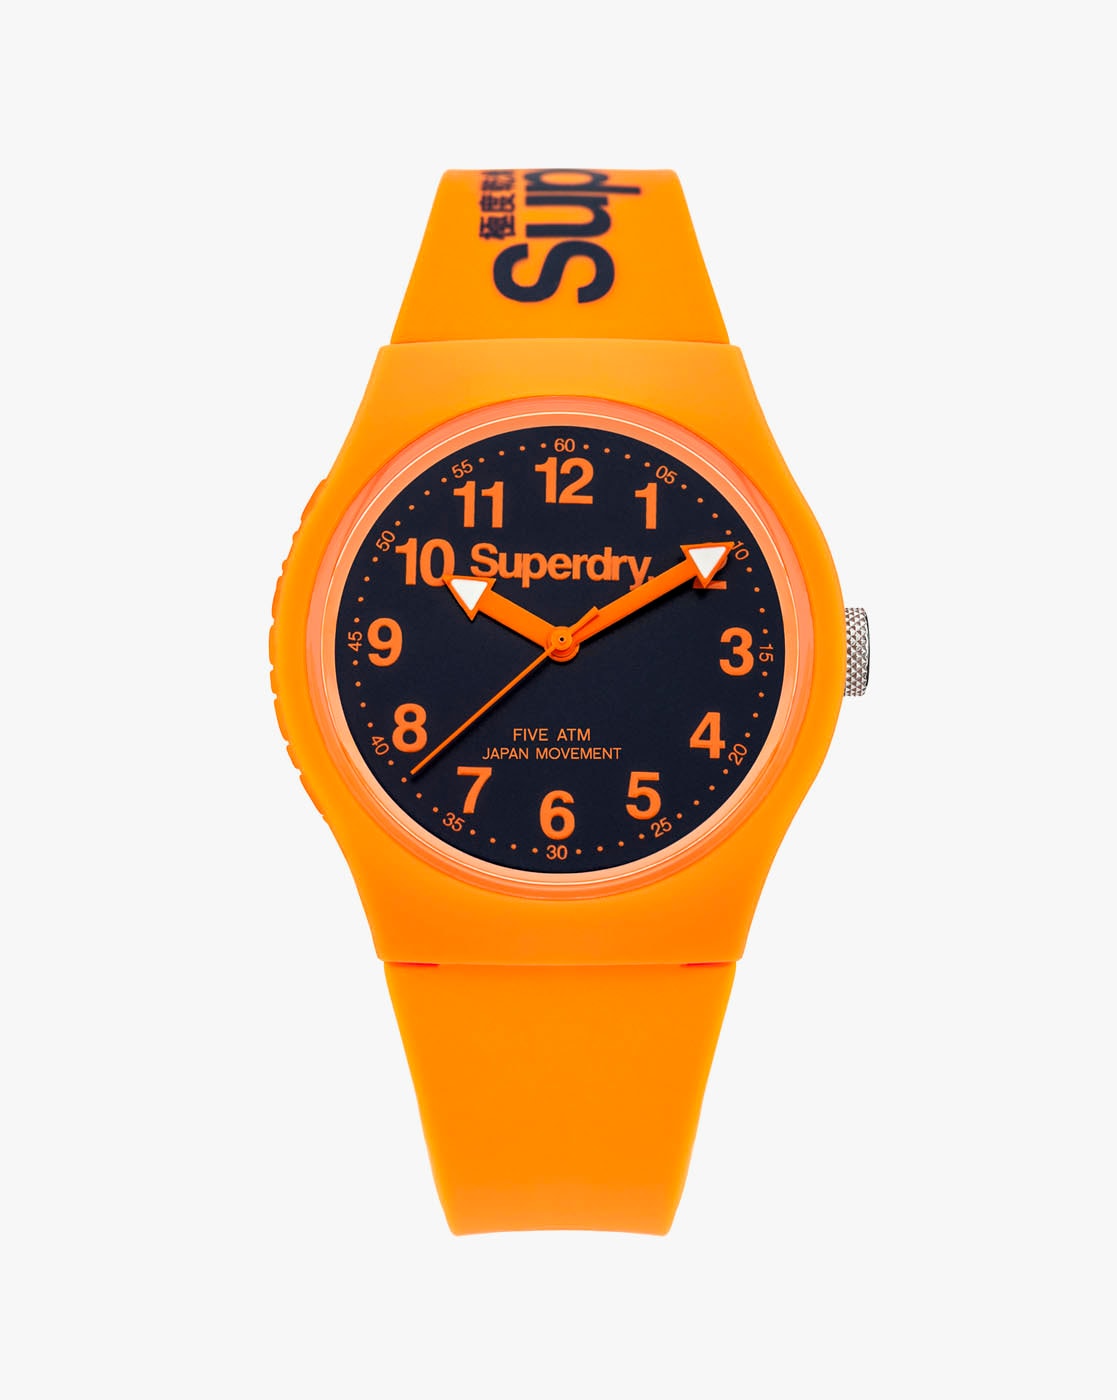 Superdry OSAKA MULTI OSAKA MULTI Analog Watch - For Men - Buy Superdry  OSAKA MULTI OSAKA MULTI Analog Watch - For Men SYG353U Online at Best  Prices in India | Flipkart.com